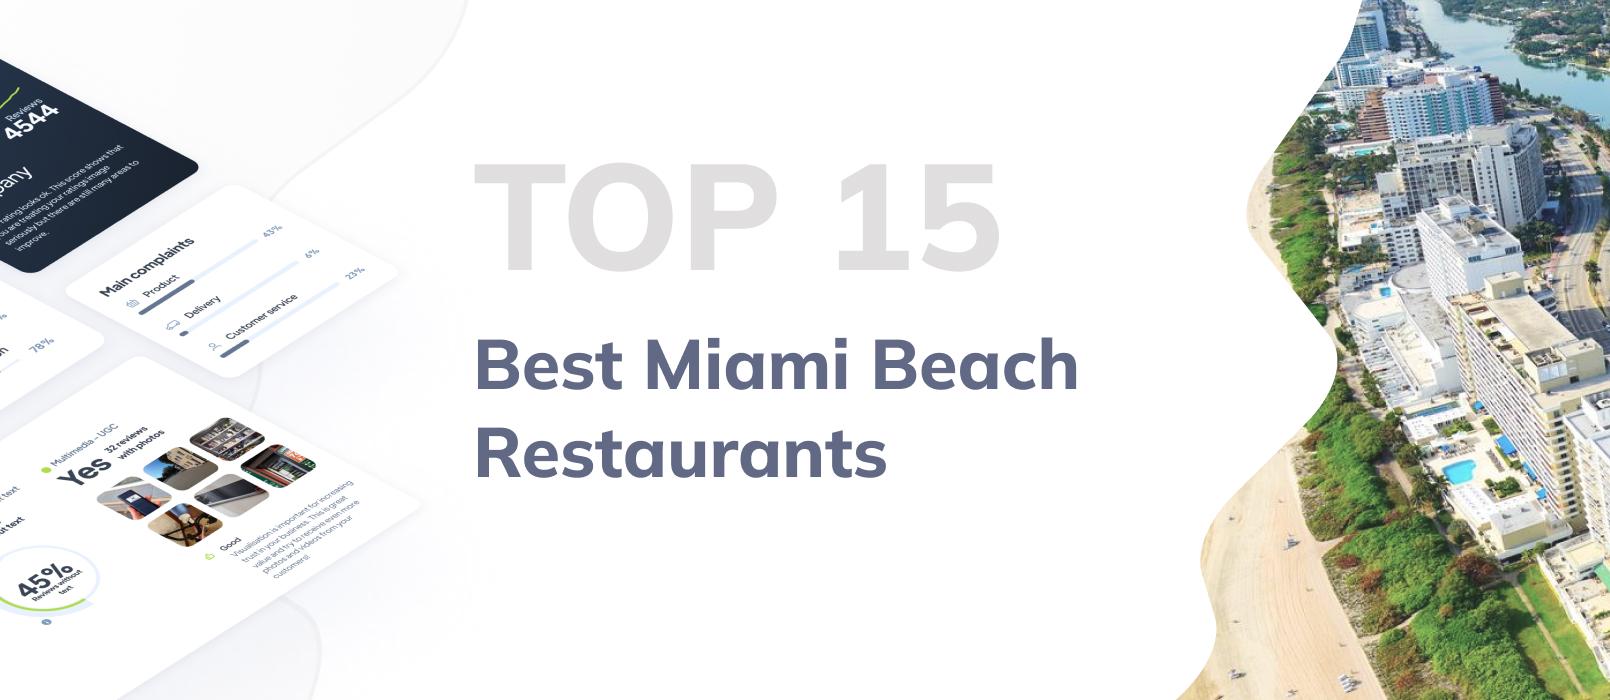 15 Best Miami Beach Restaurants (Based on Customer Reviews)